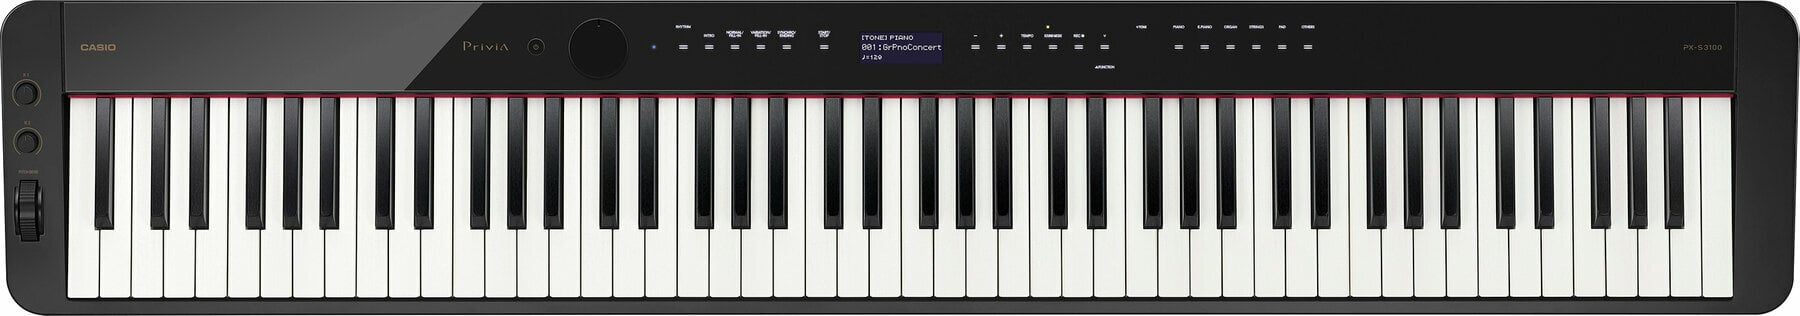 Színpadi zongora Casio PX-S3100 BK Privia Színpadi zongora